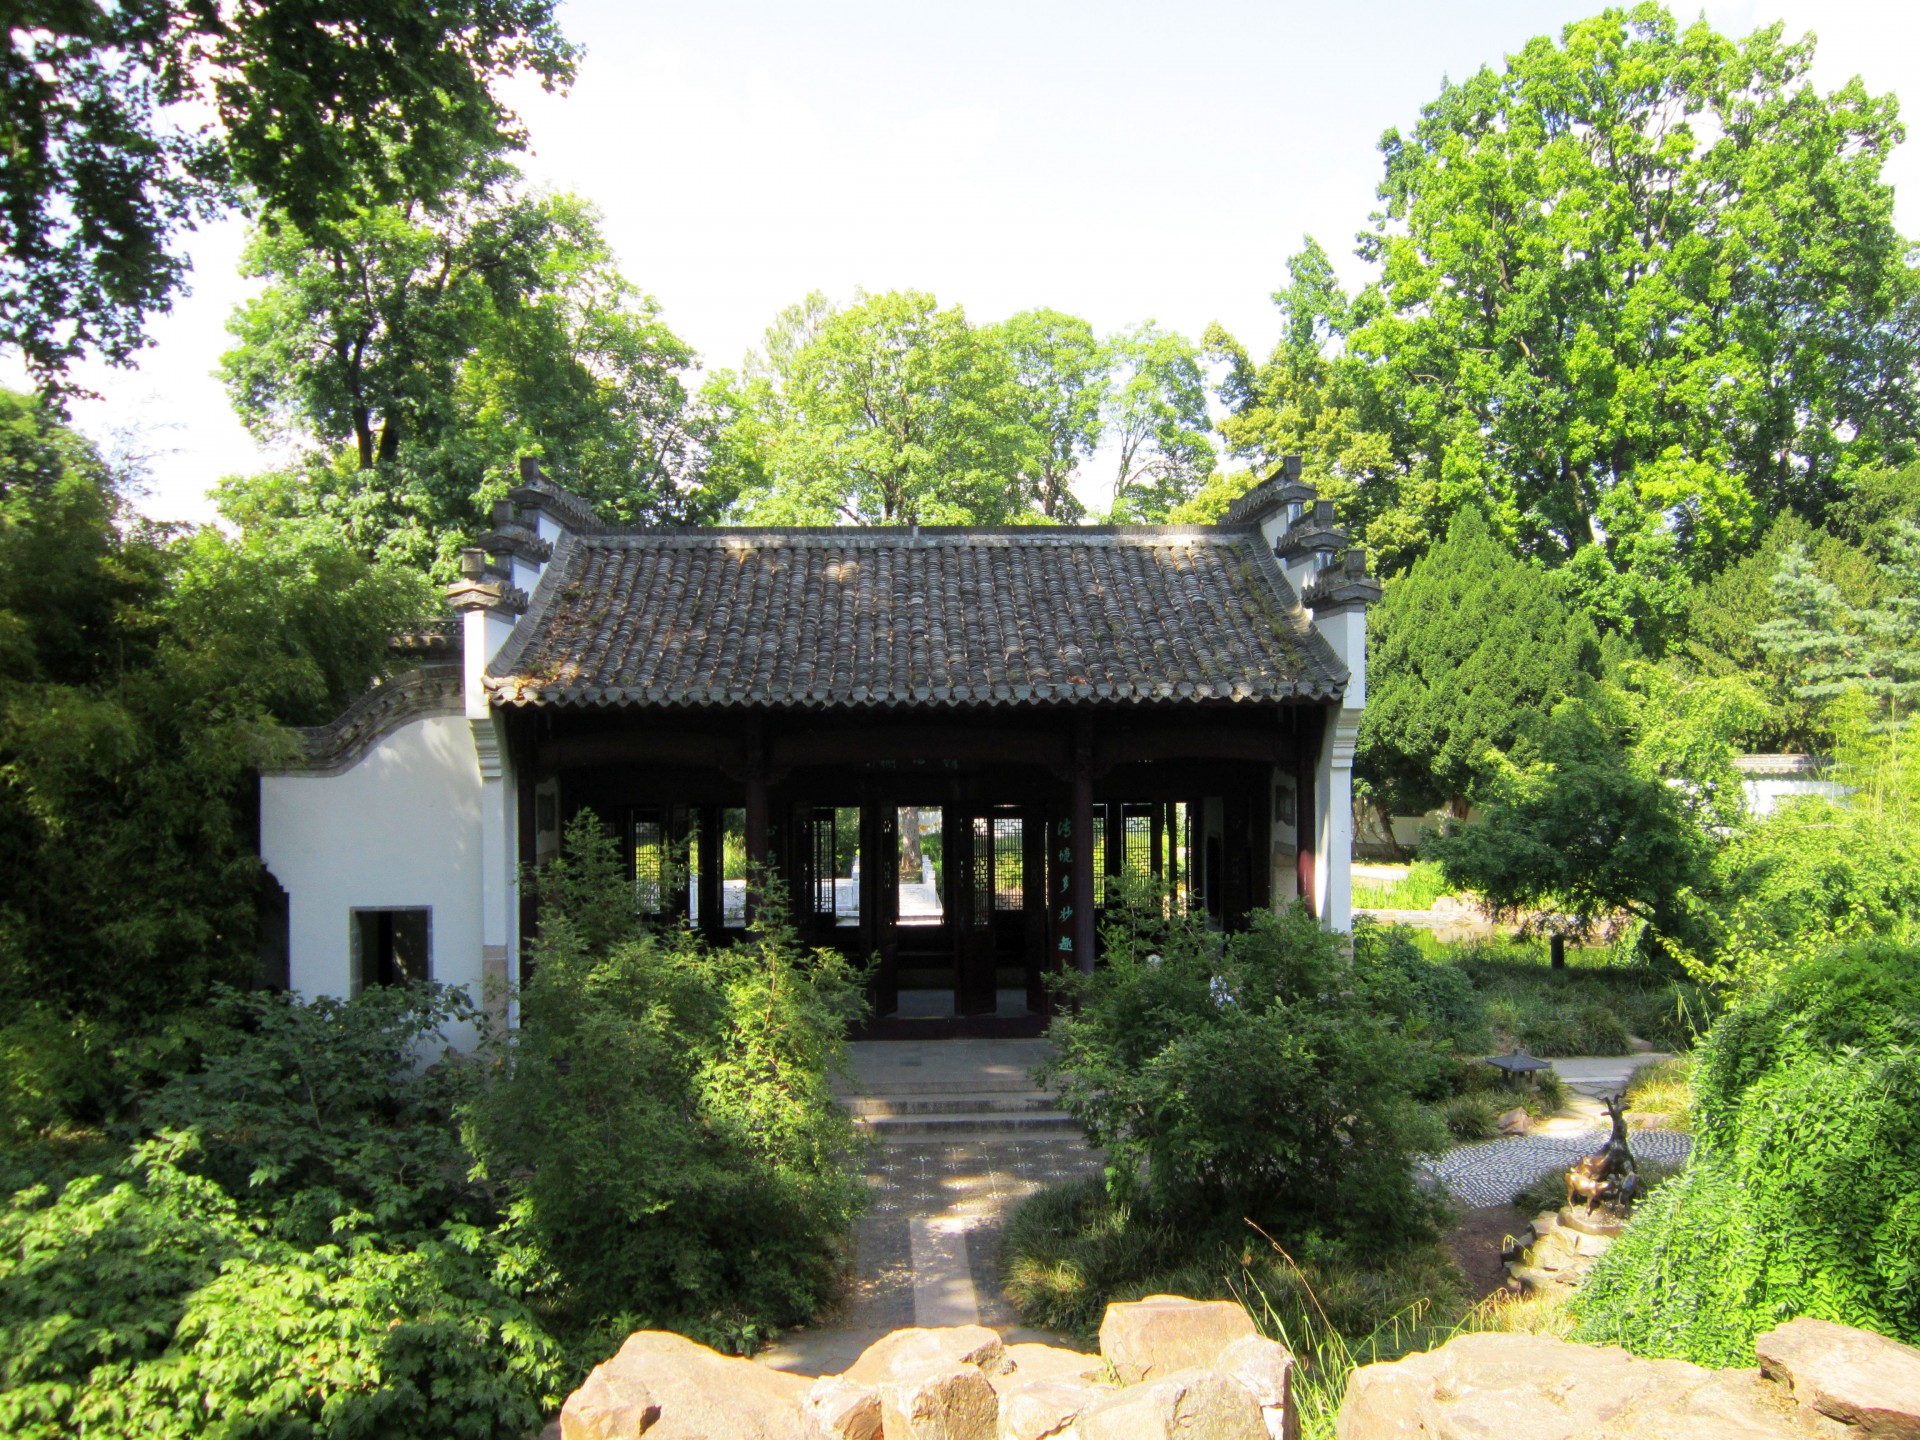 Temple in Chinese Garden in Frankfurt (Main)